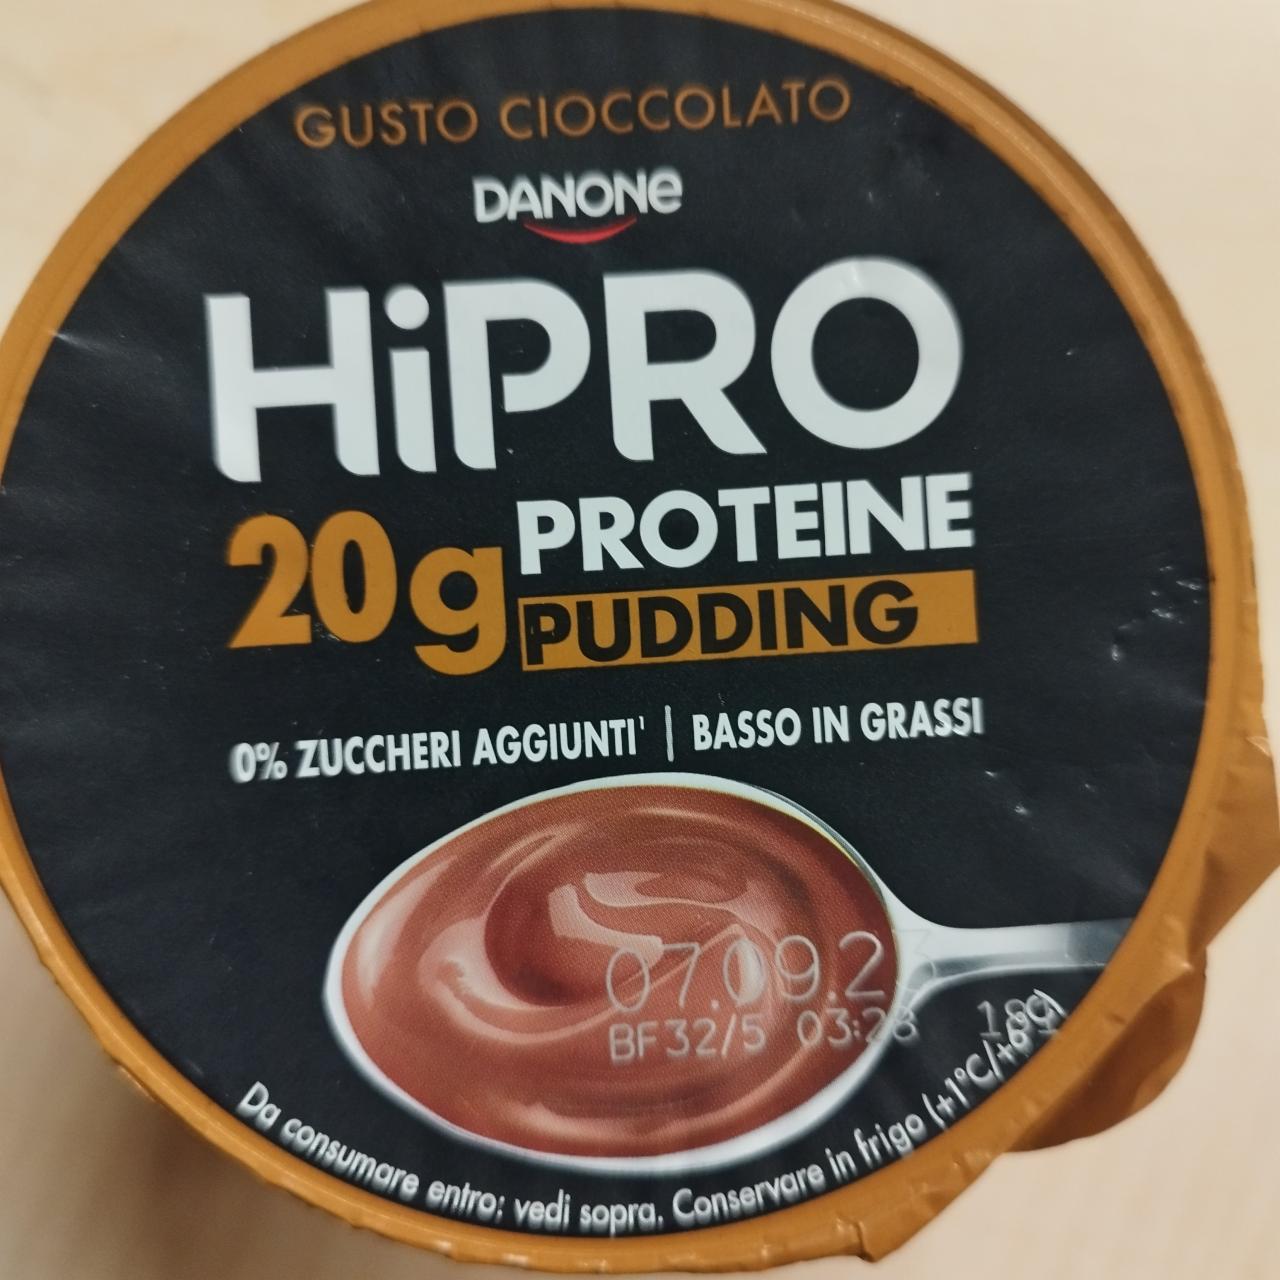 Фото - HiPRO Gusto cioccolato 20g proteine pudding Danone